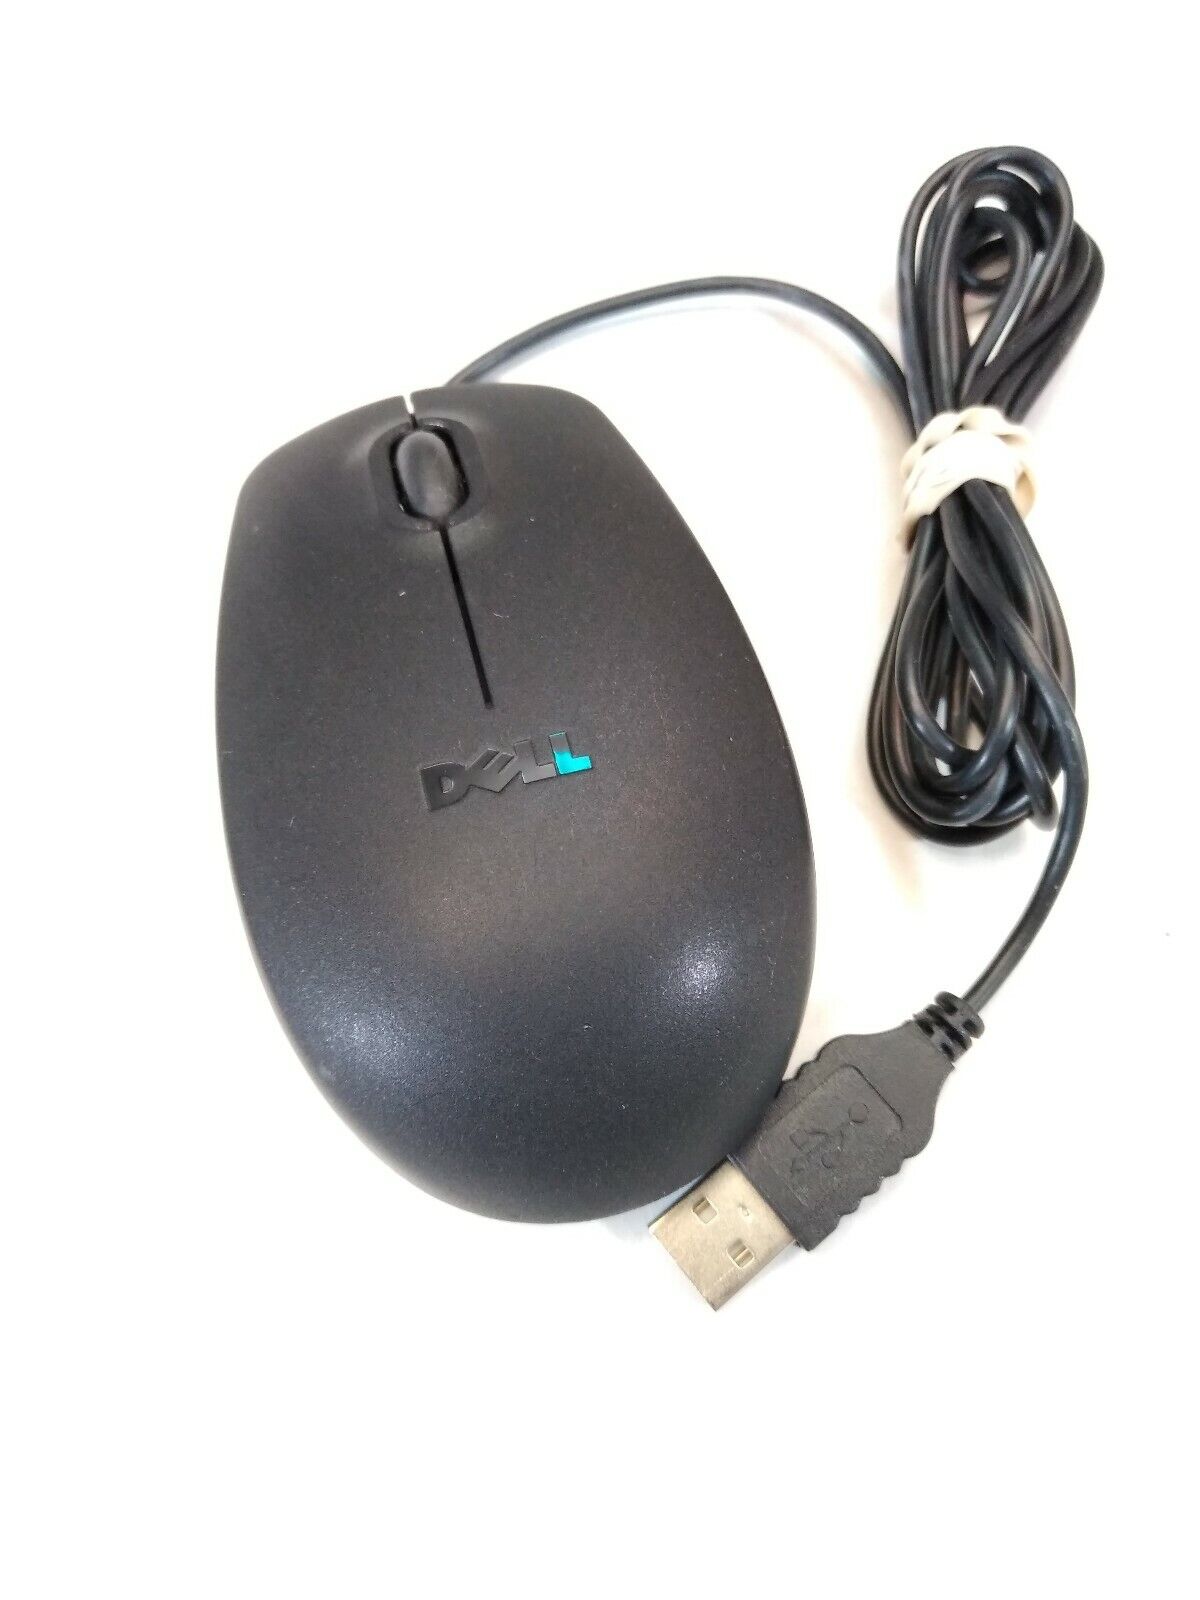 Dell USB Optical 3 button Mouse MS111-L, MS111-P